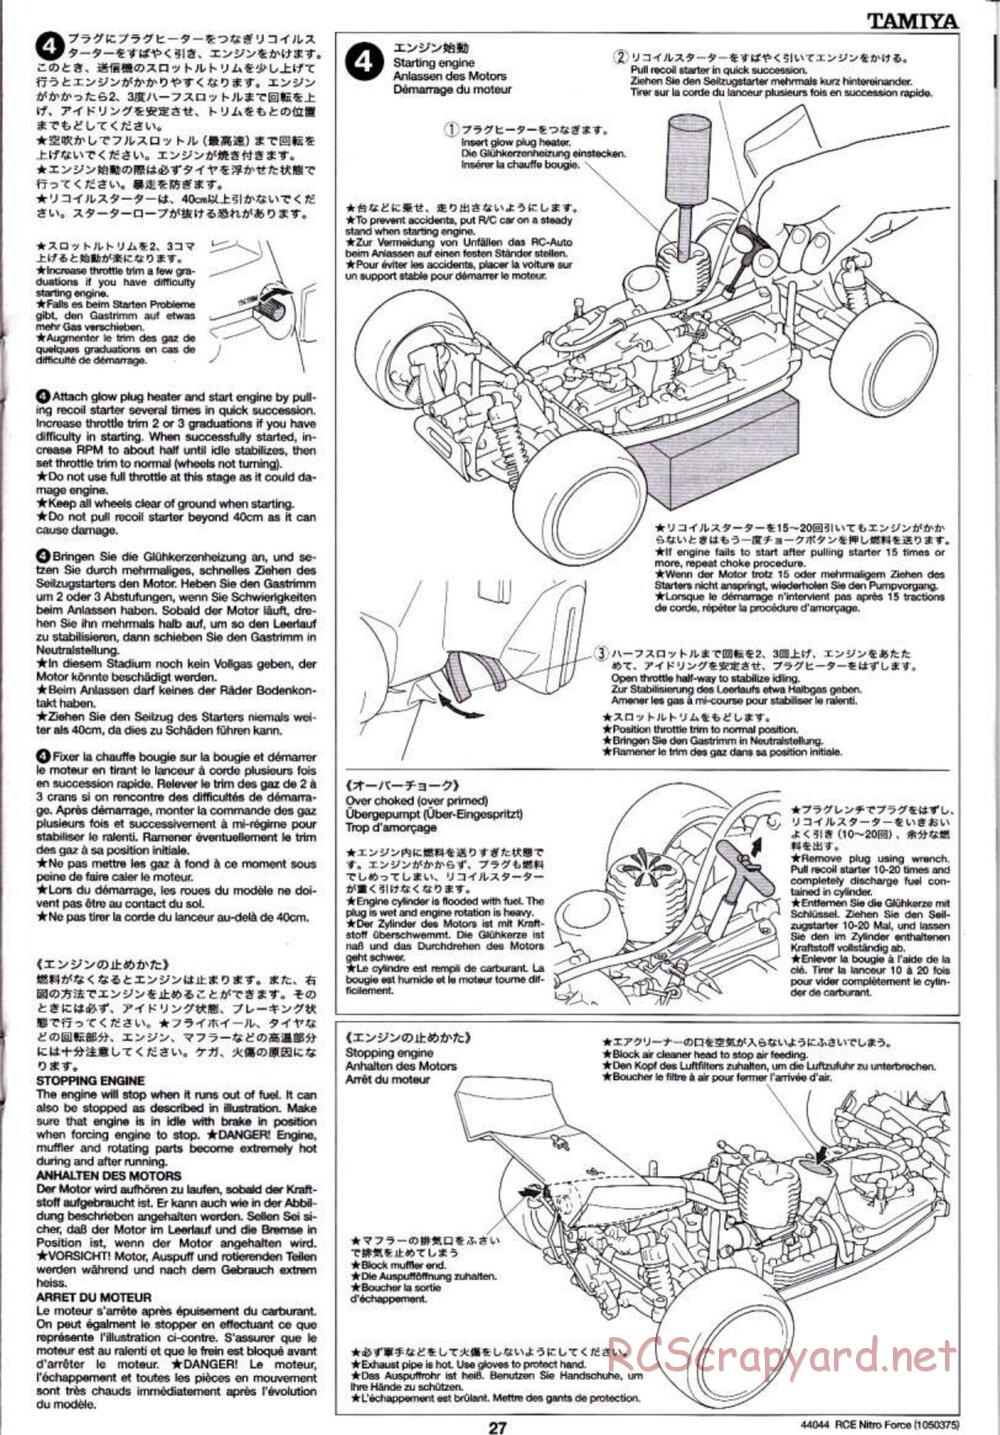 Tamiya - Nitro Force - NDF-01 Chassis - Manual - Page 27